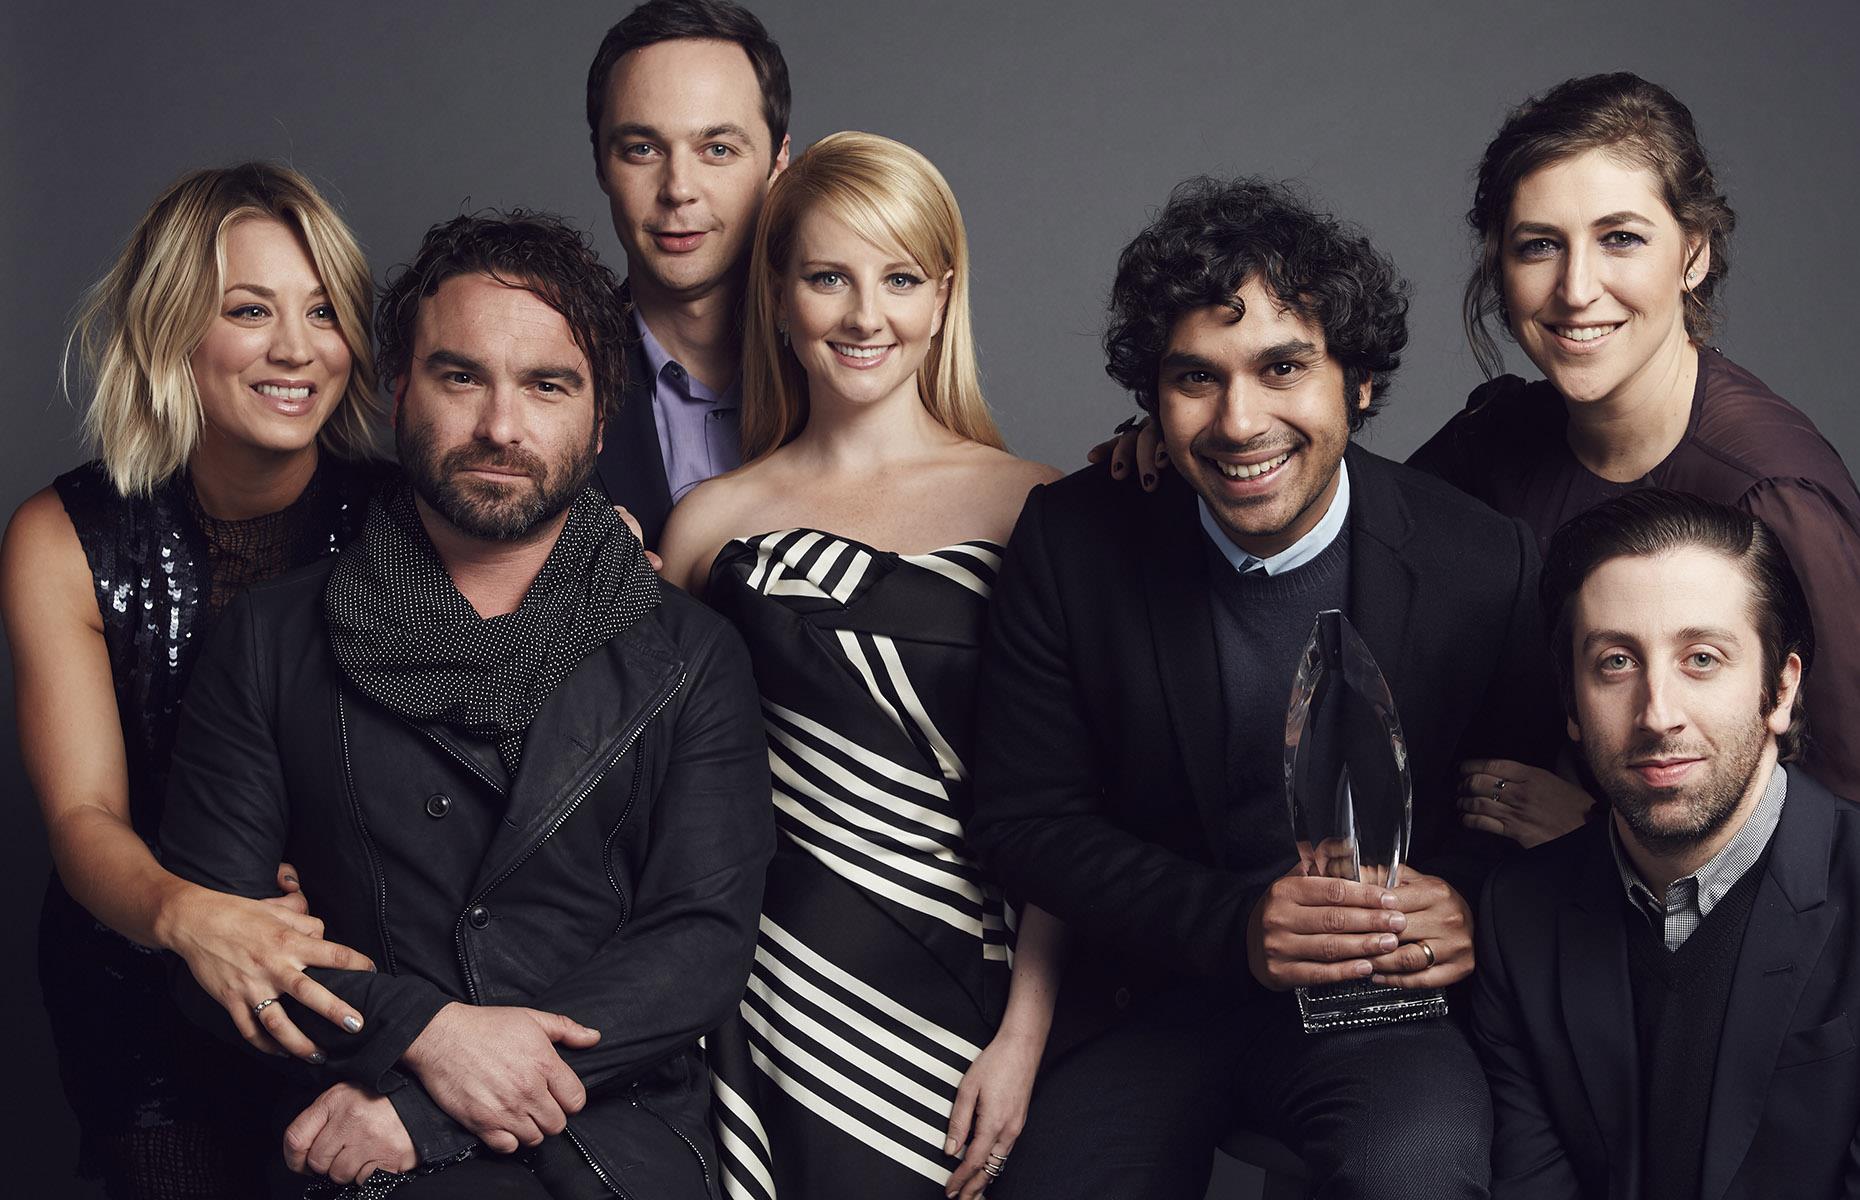 Big bucks in The Big Bang Theory and beyond